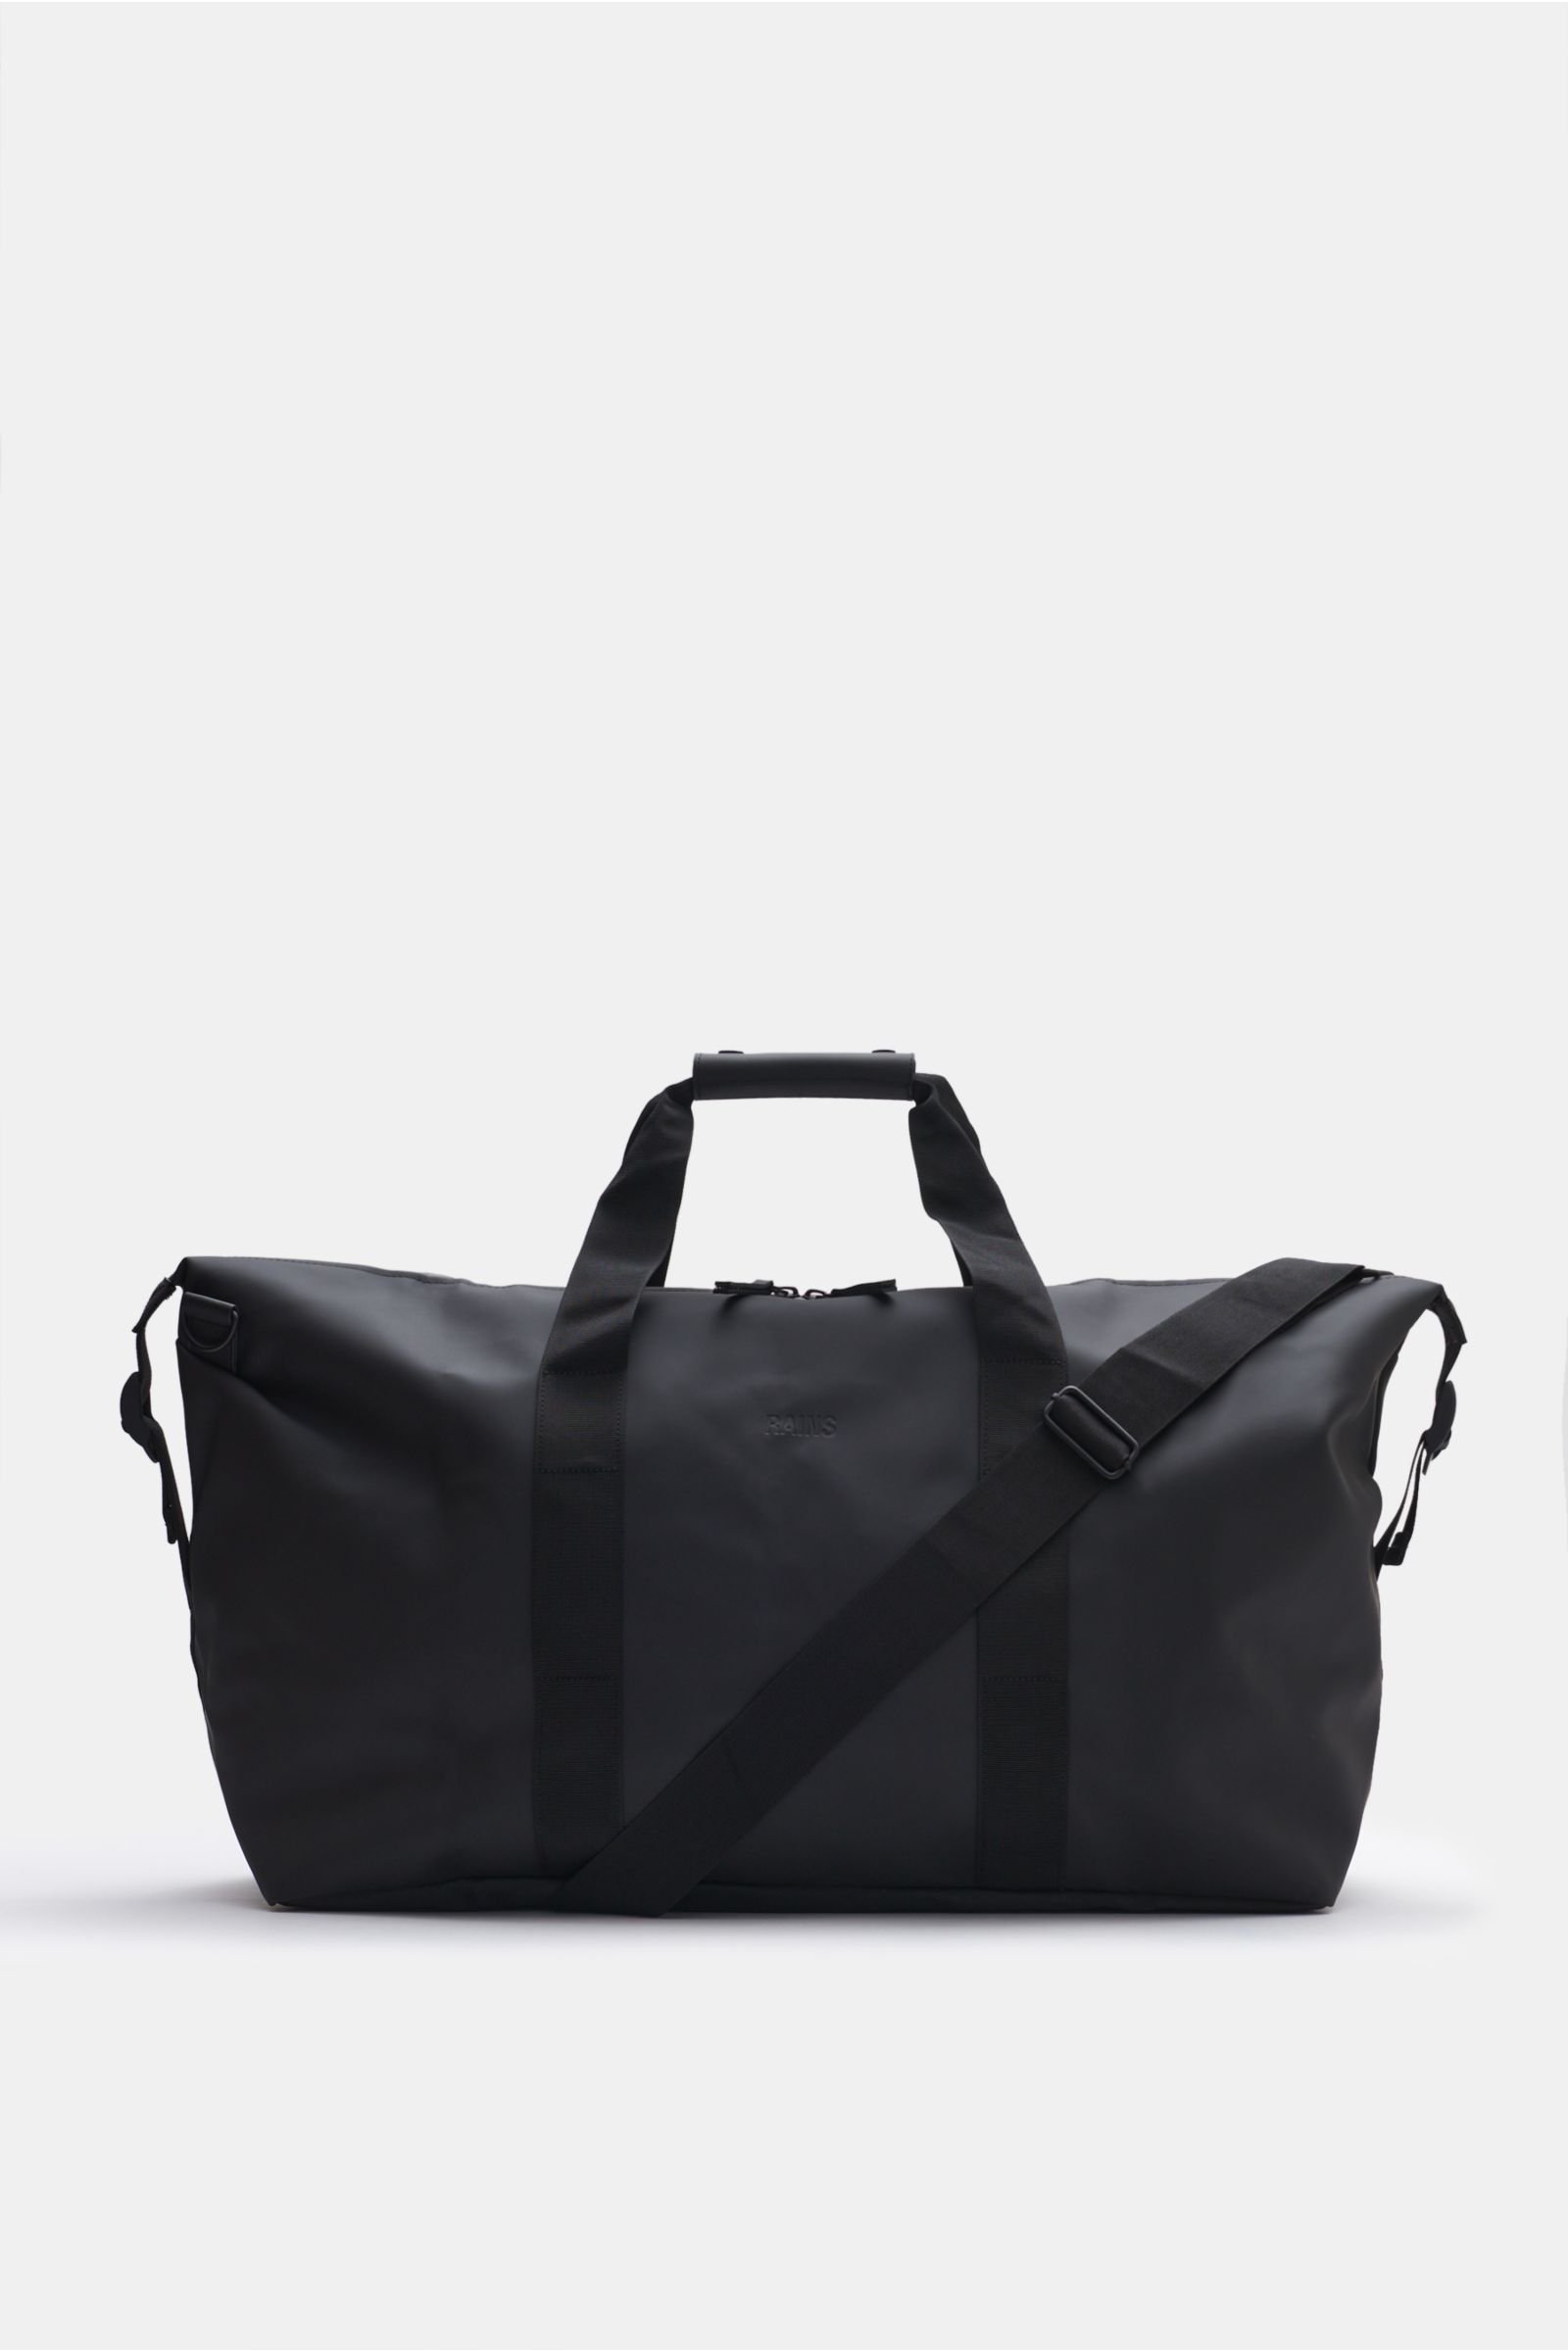 Travel bag 'Weekend Bag Large' black